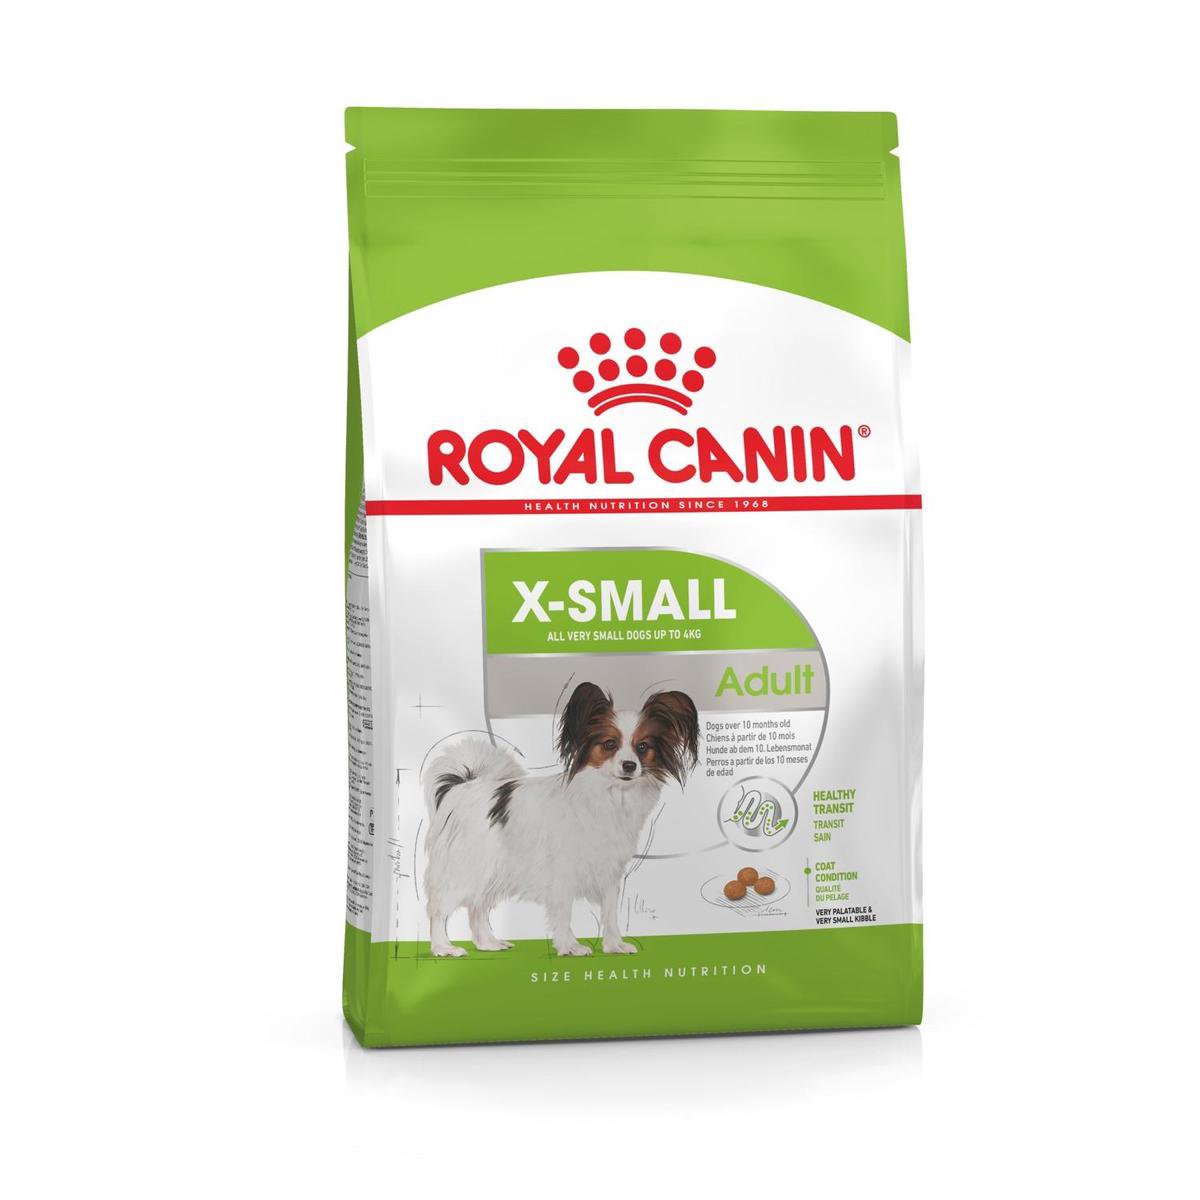 Royal Canin X-Small Adult 3 KG - Royal Canin